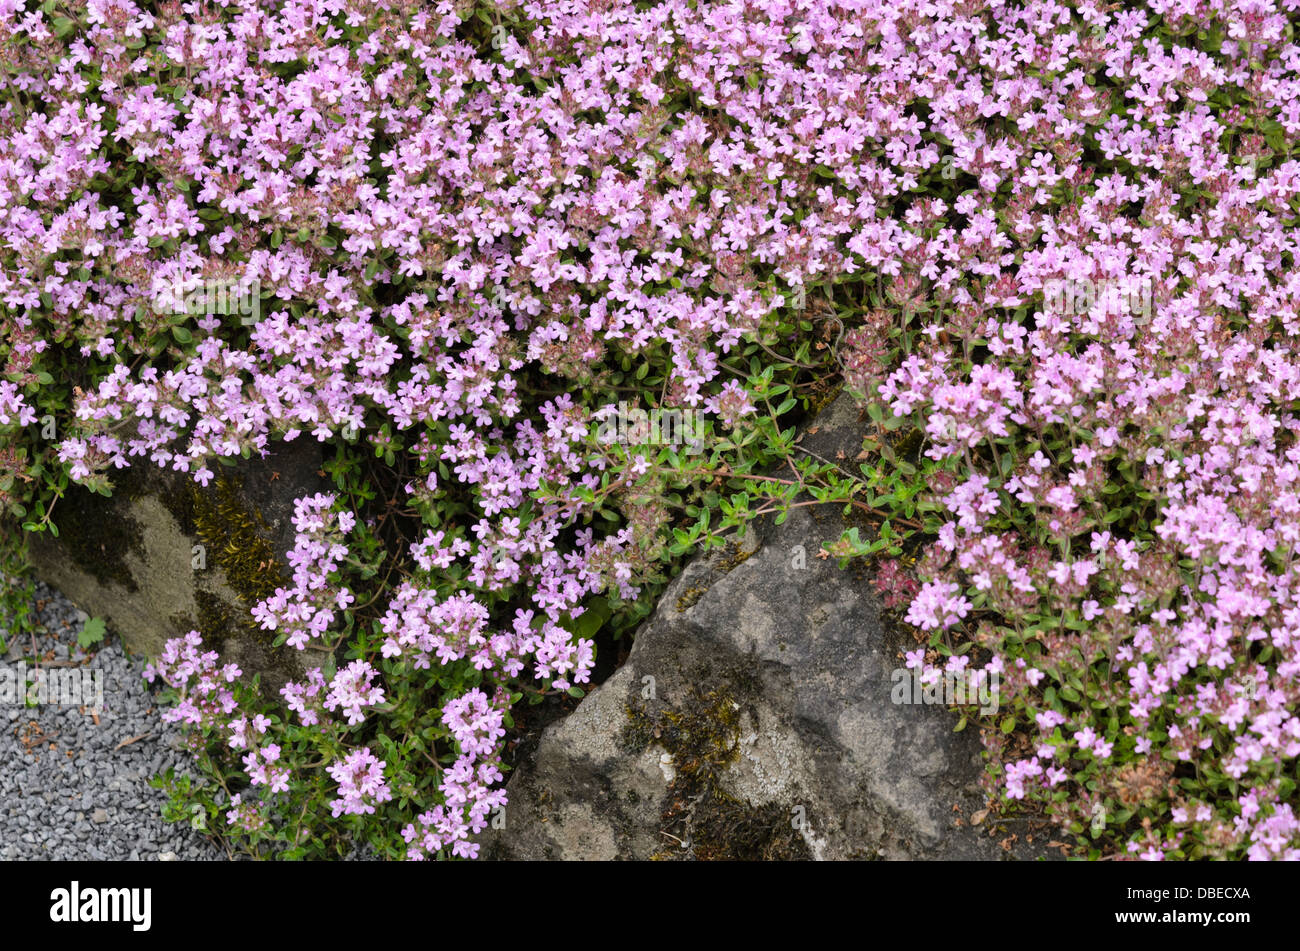 Wild thyme (Thymus serpyllum var. montanus) Stock Photo